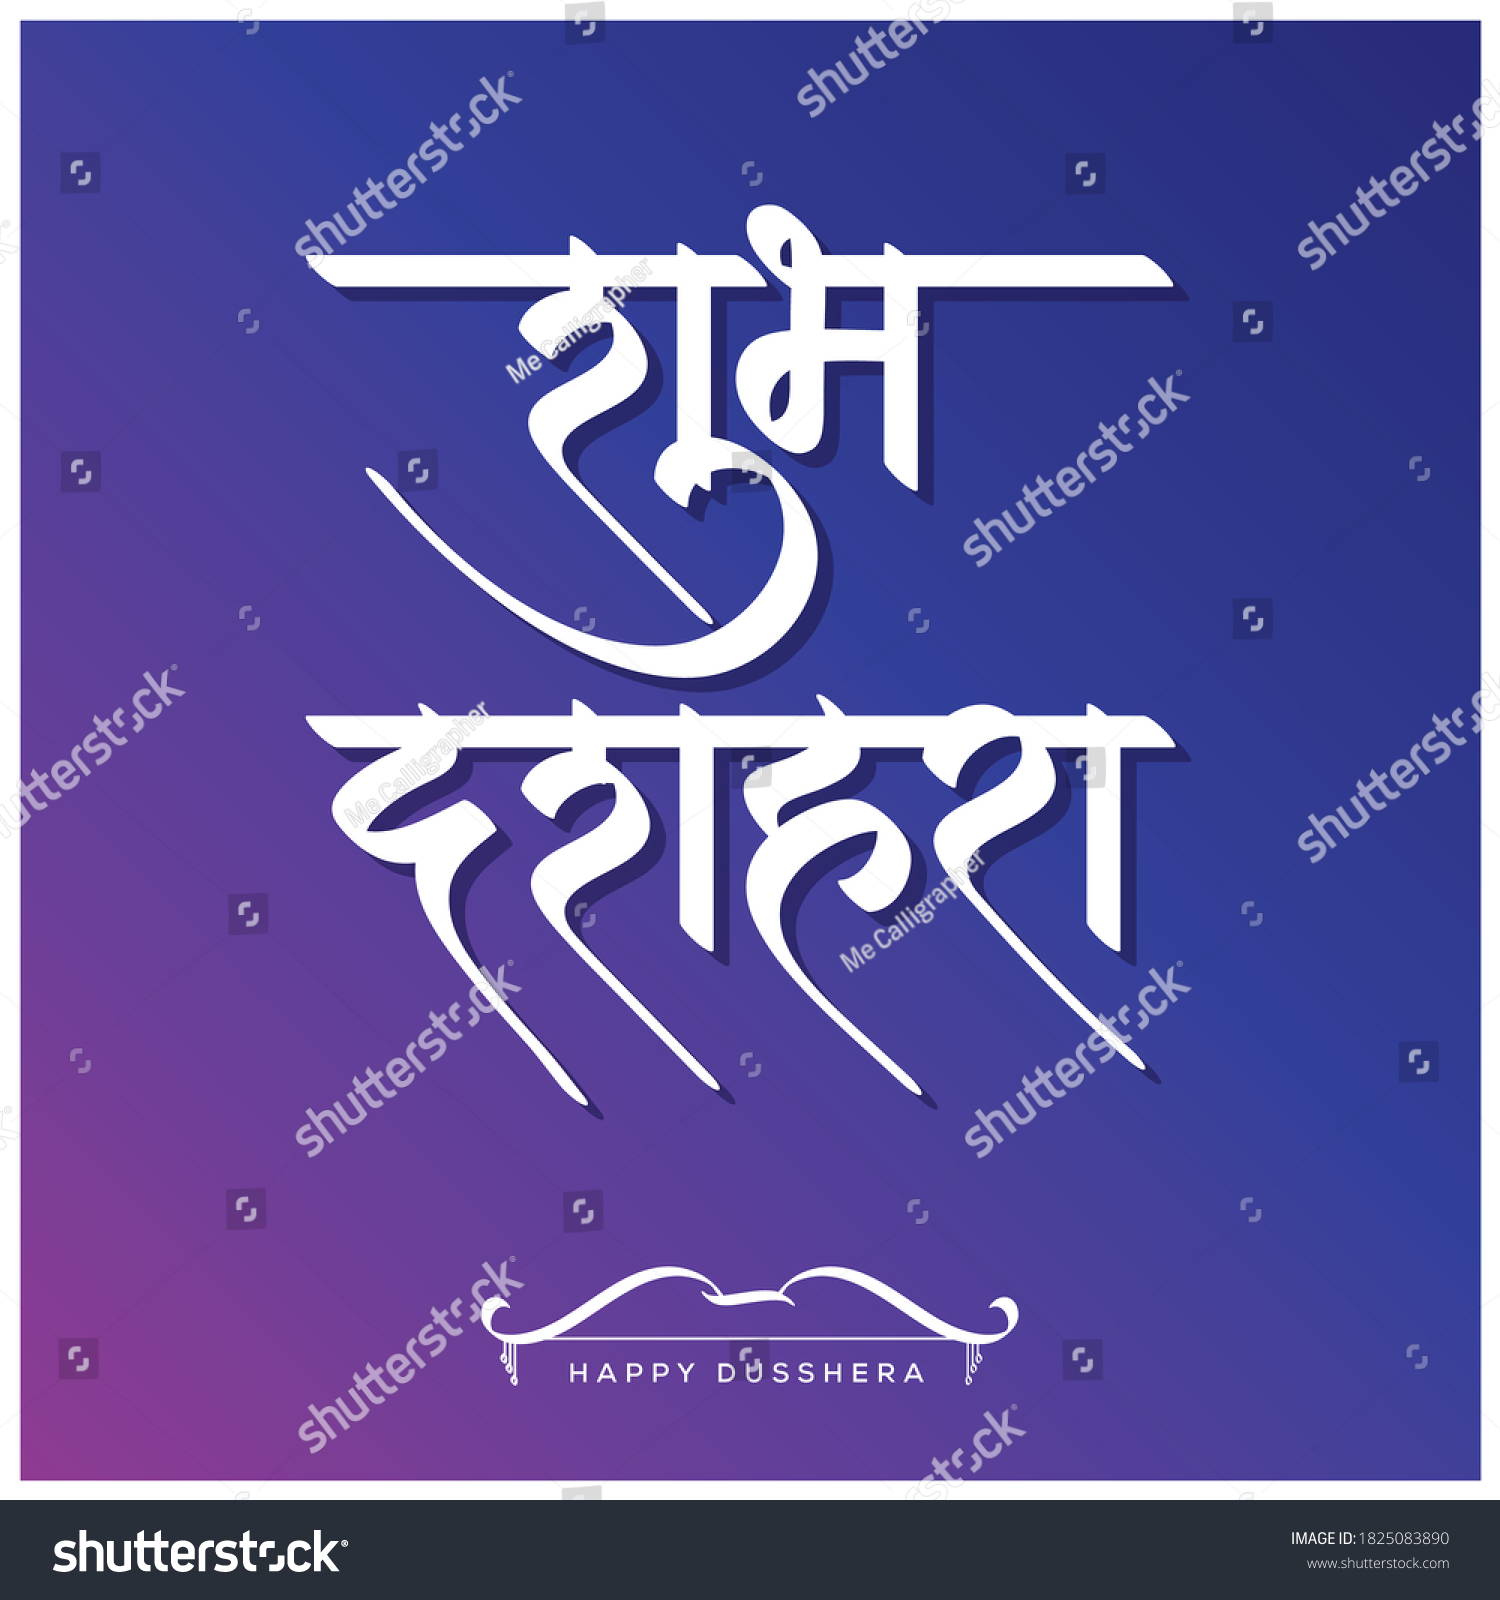 Happy Dussehra Greeting Poster Marathi Calligraphy Stock Vector ...